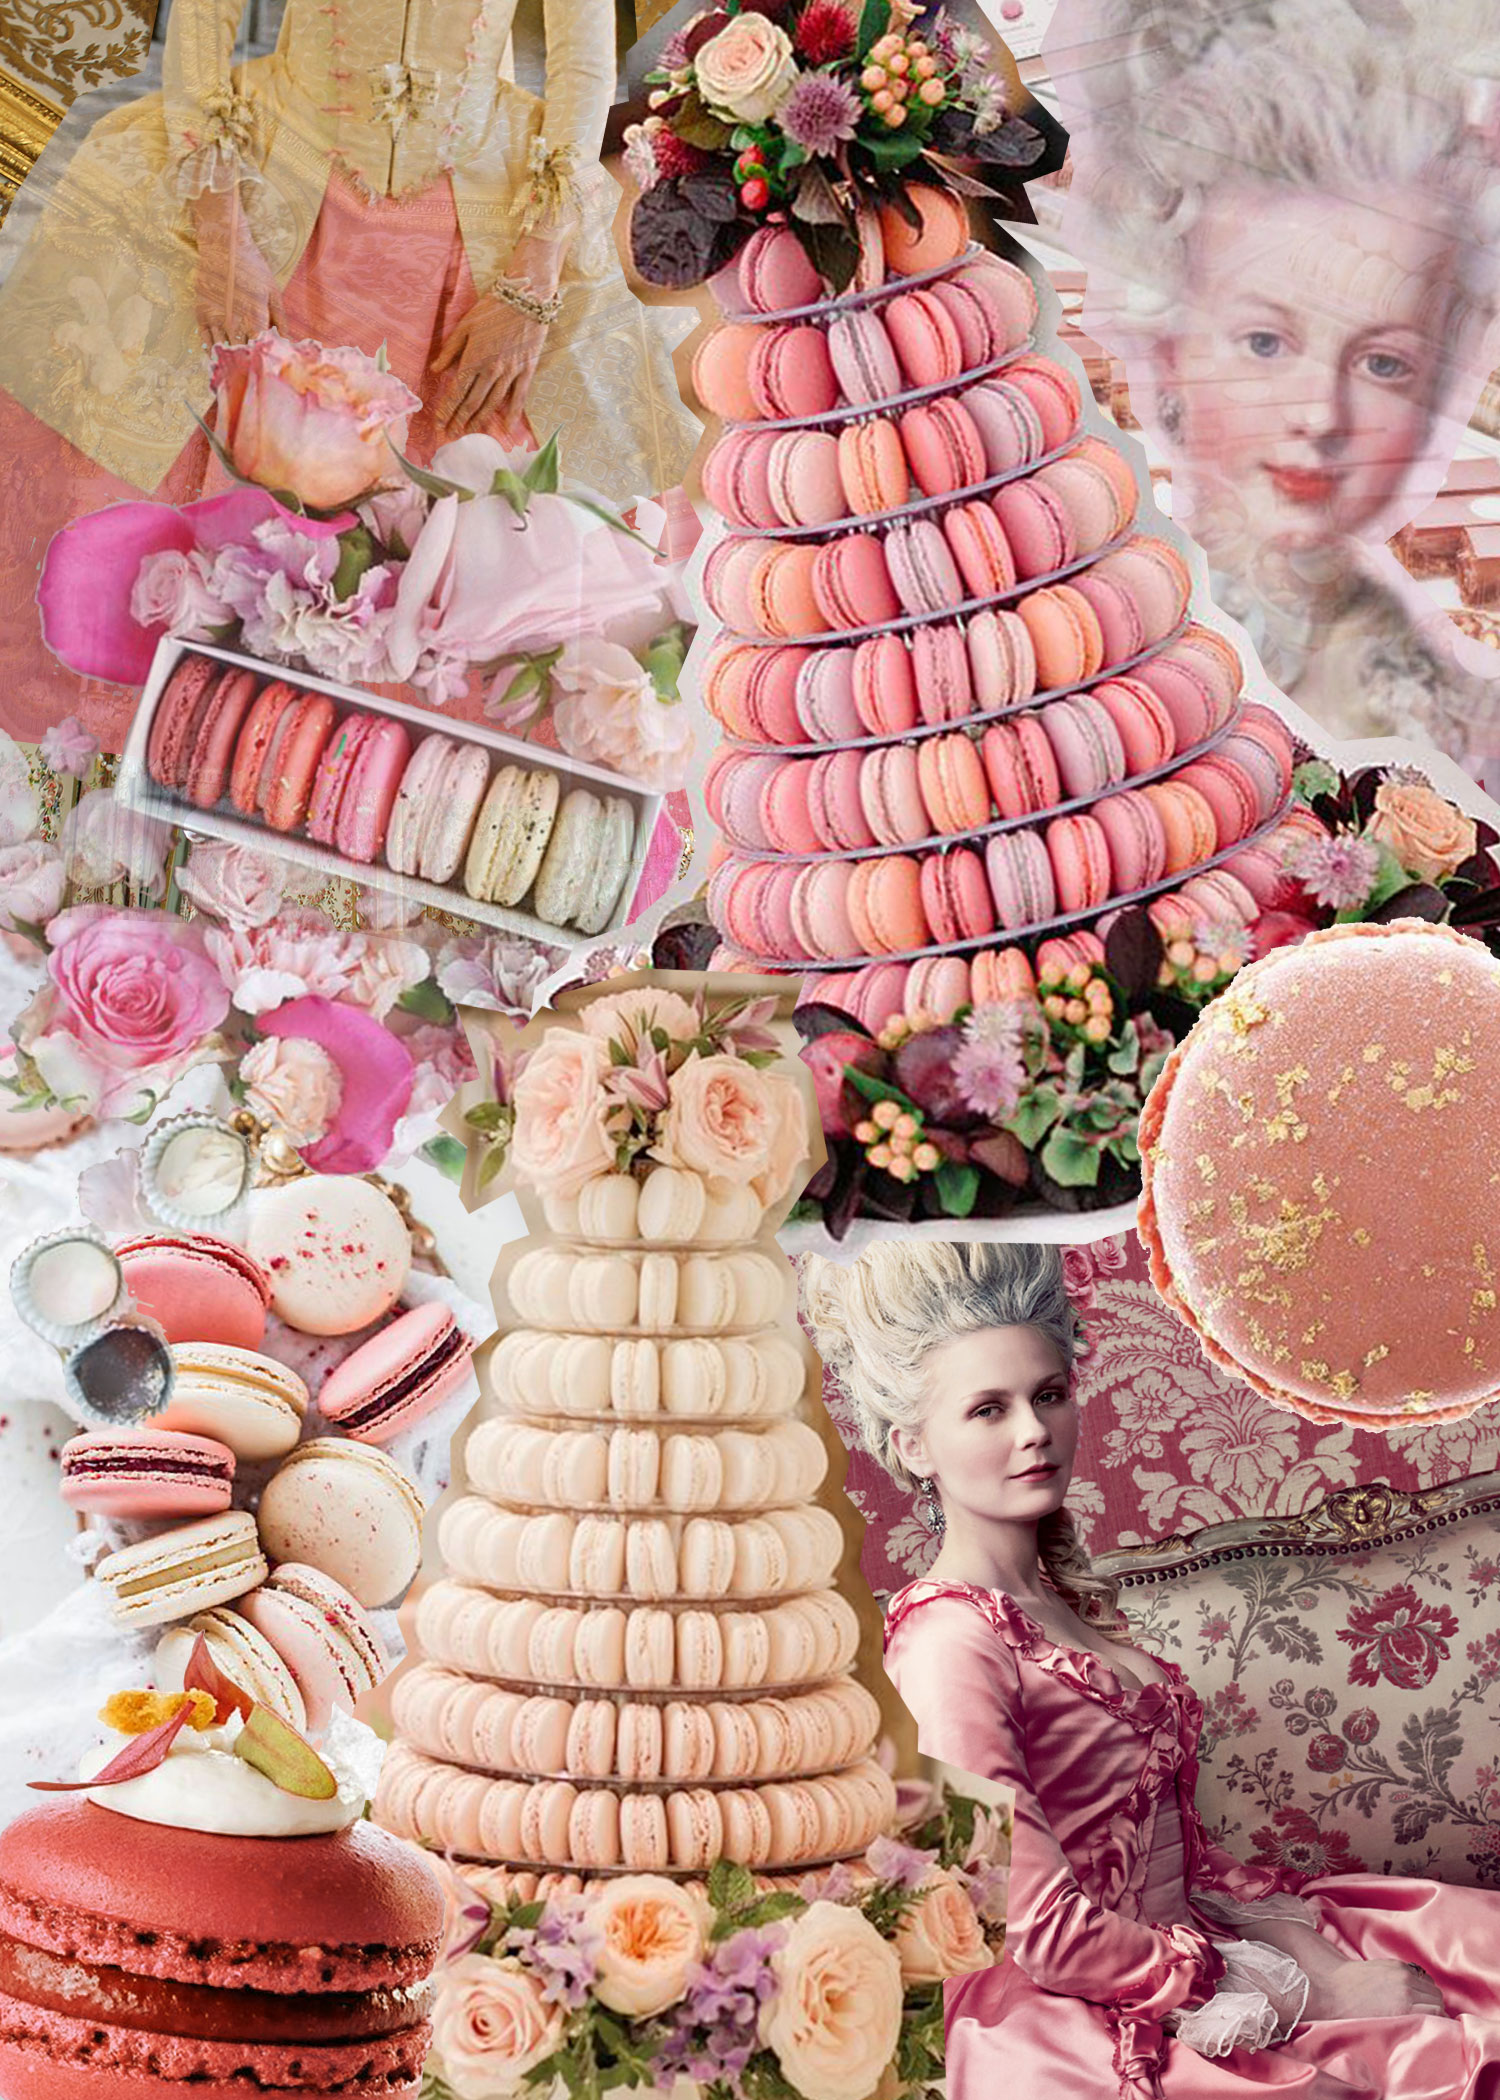 Macaron-Collage.jpg